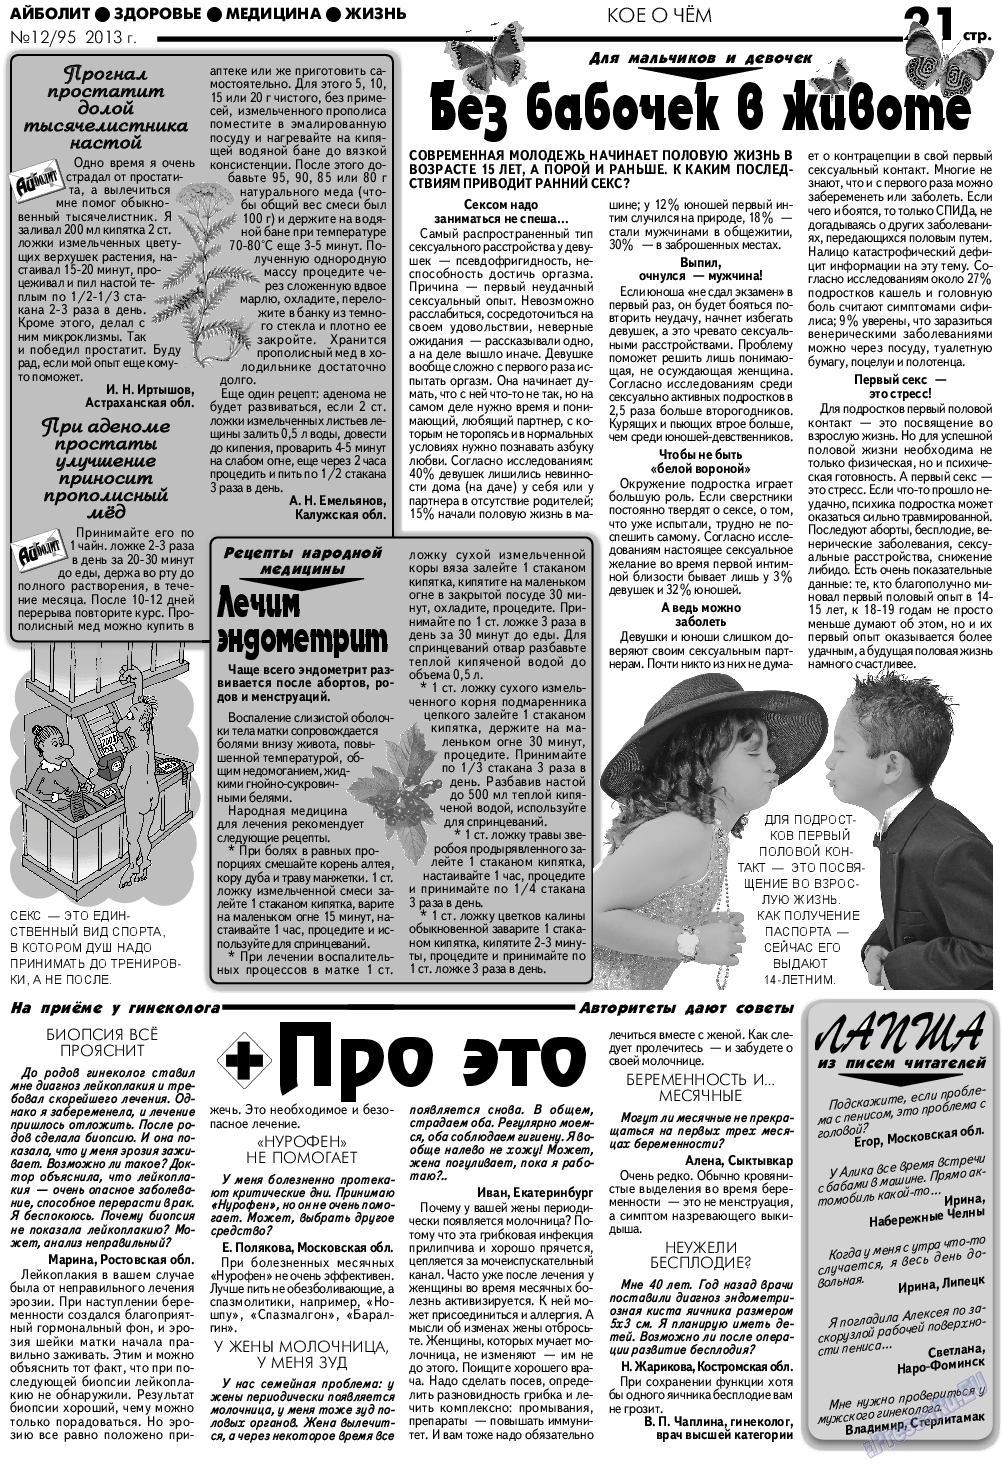 АйБолит (газета). 2013 год, номер 12, стр. 21